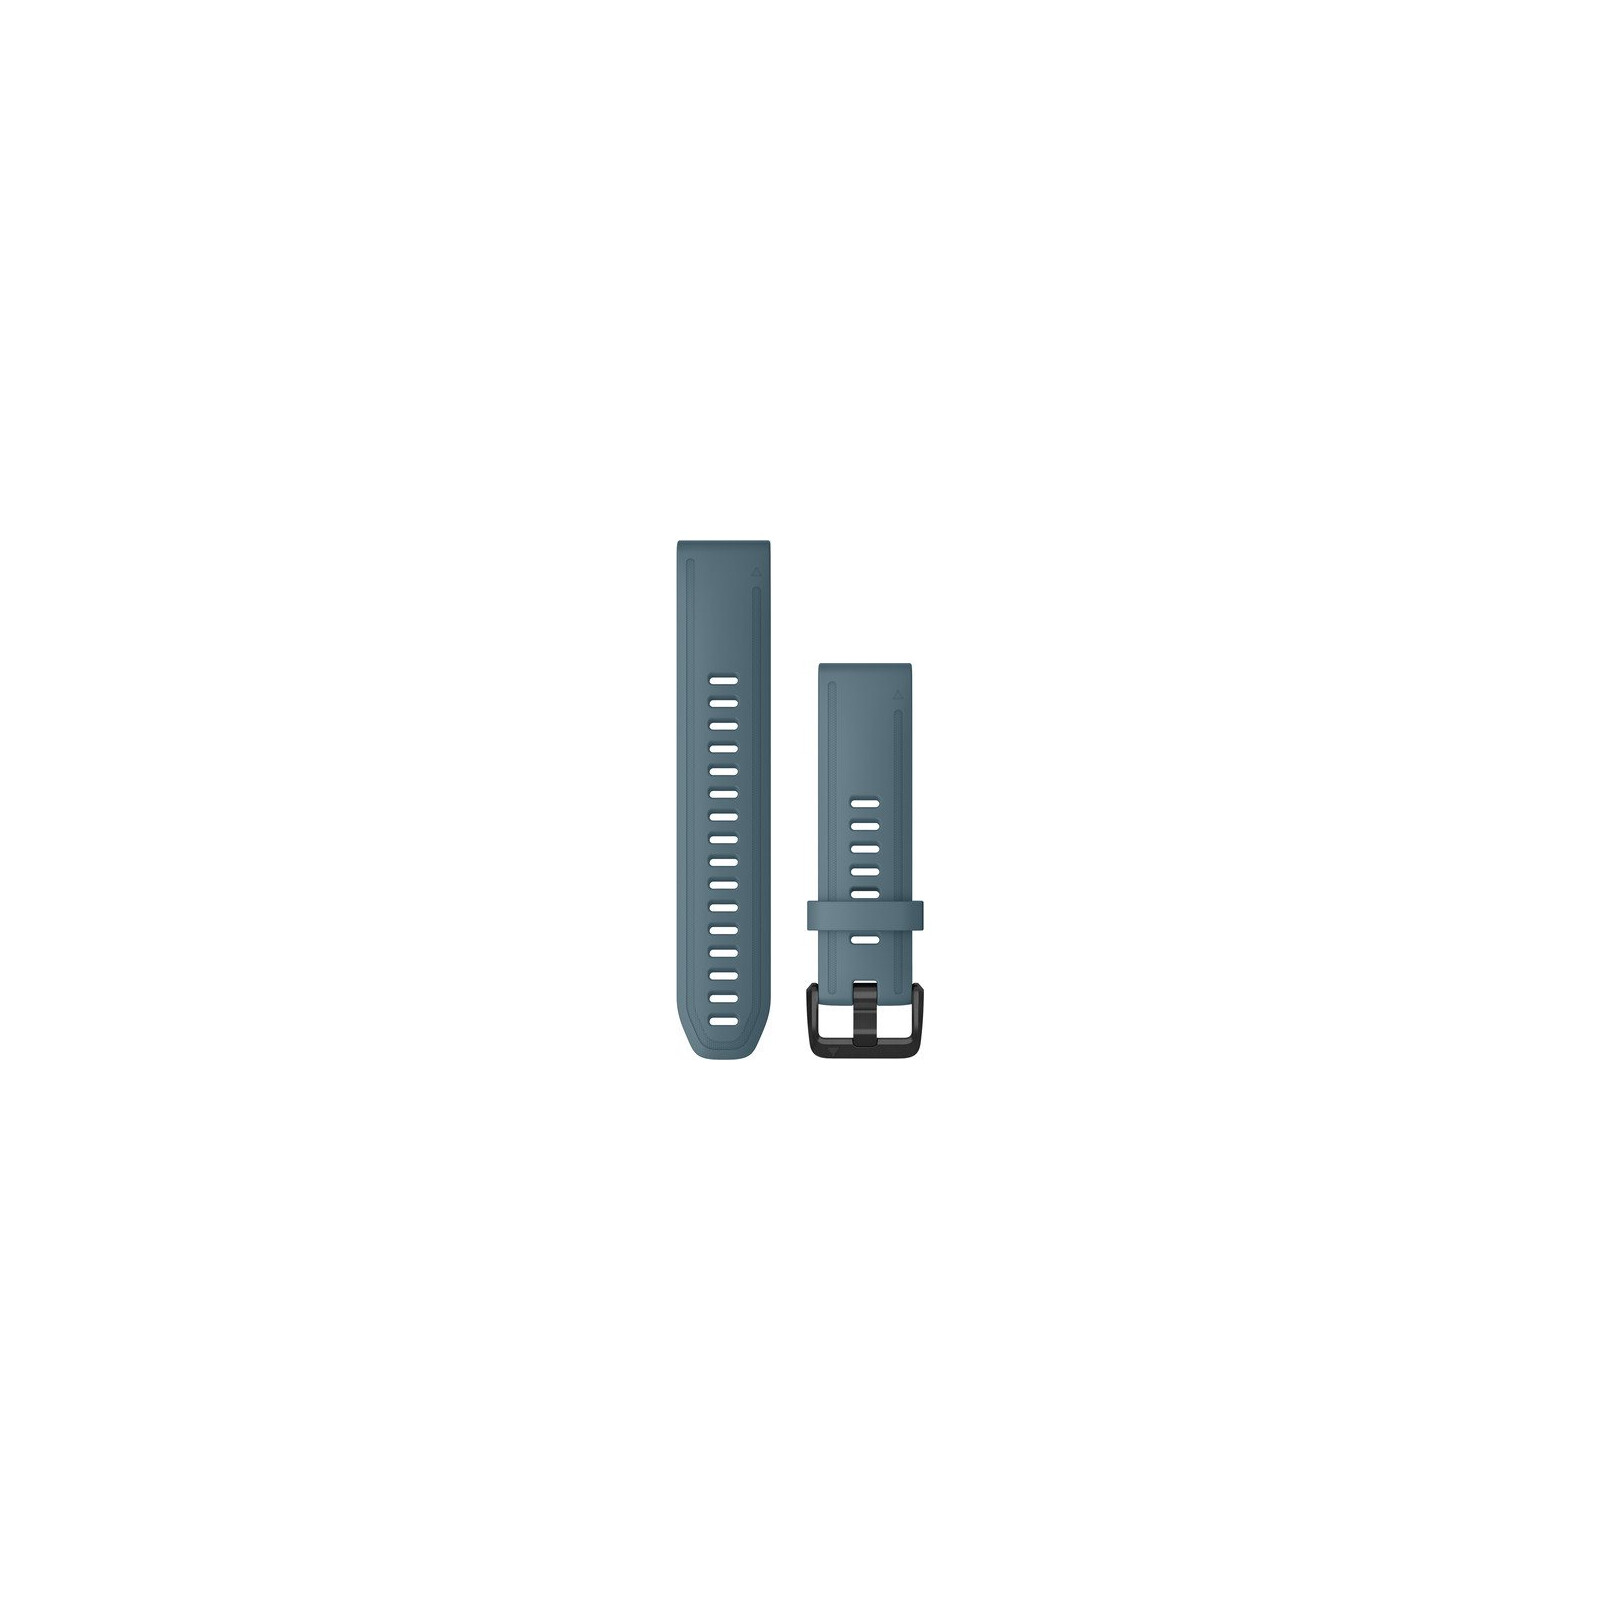 Garmin Quickfit Band 20mm S/M Silikon taubenblau schwarz